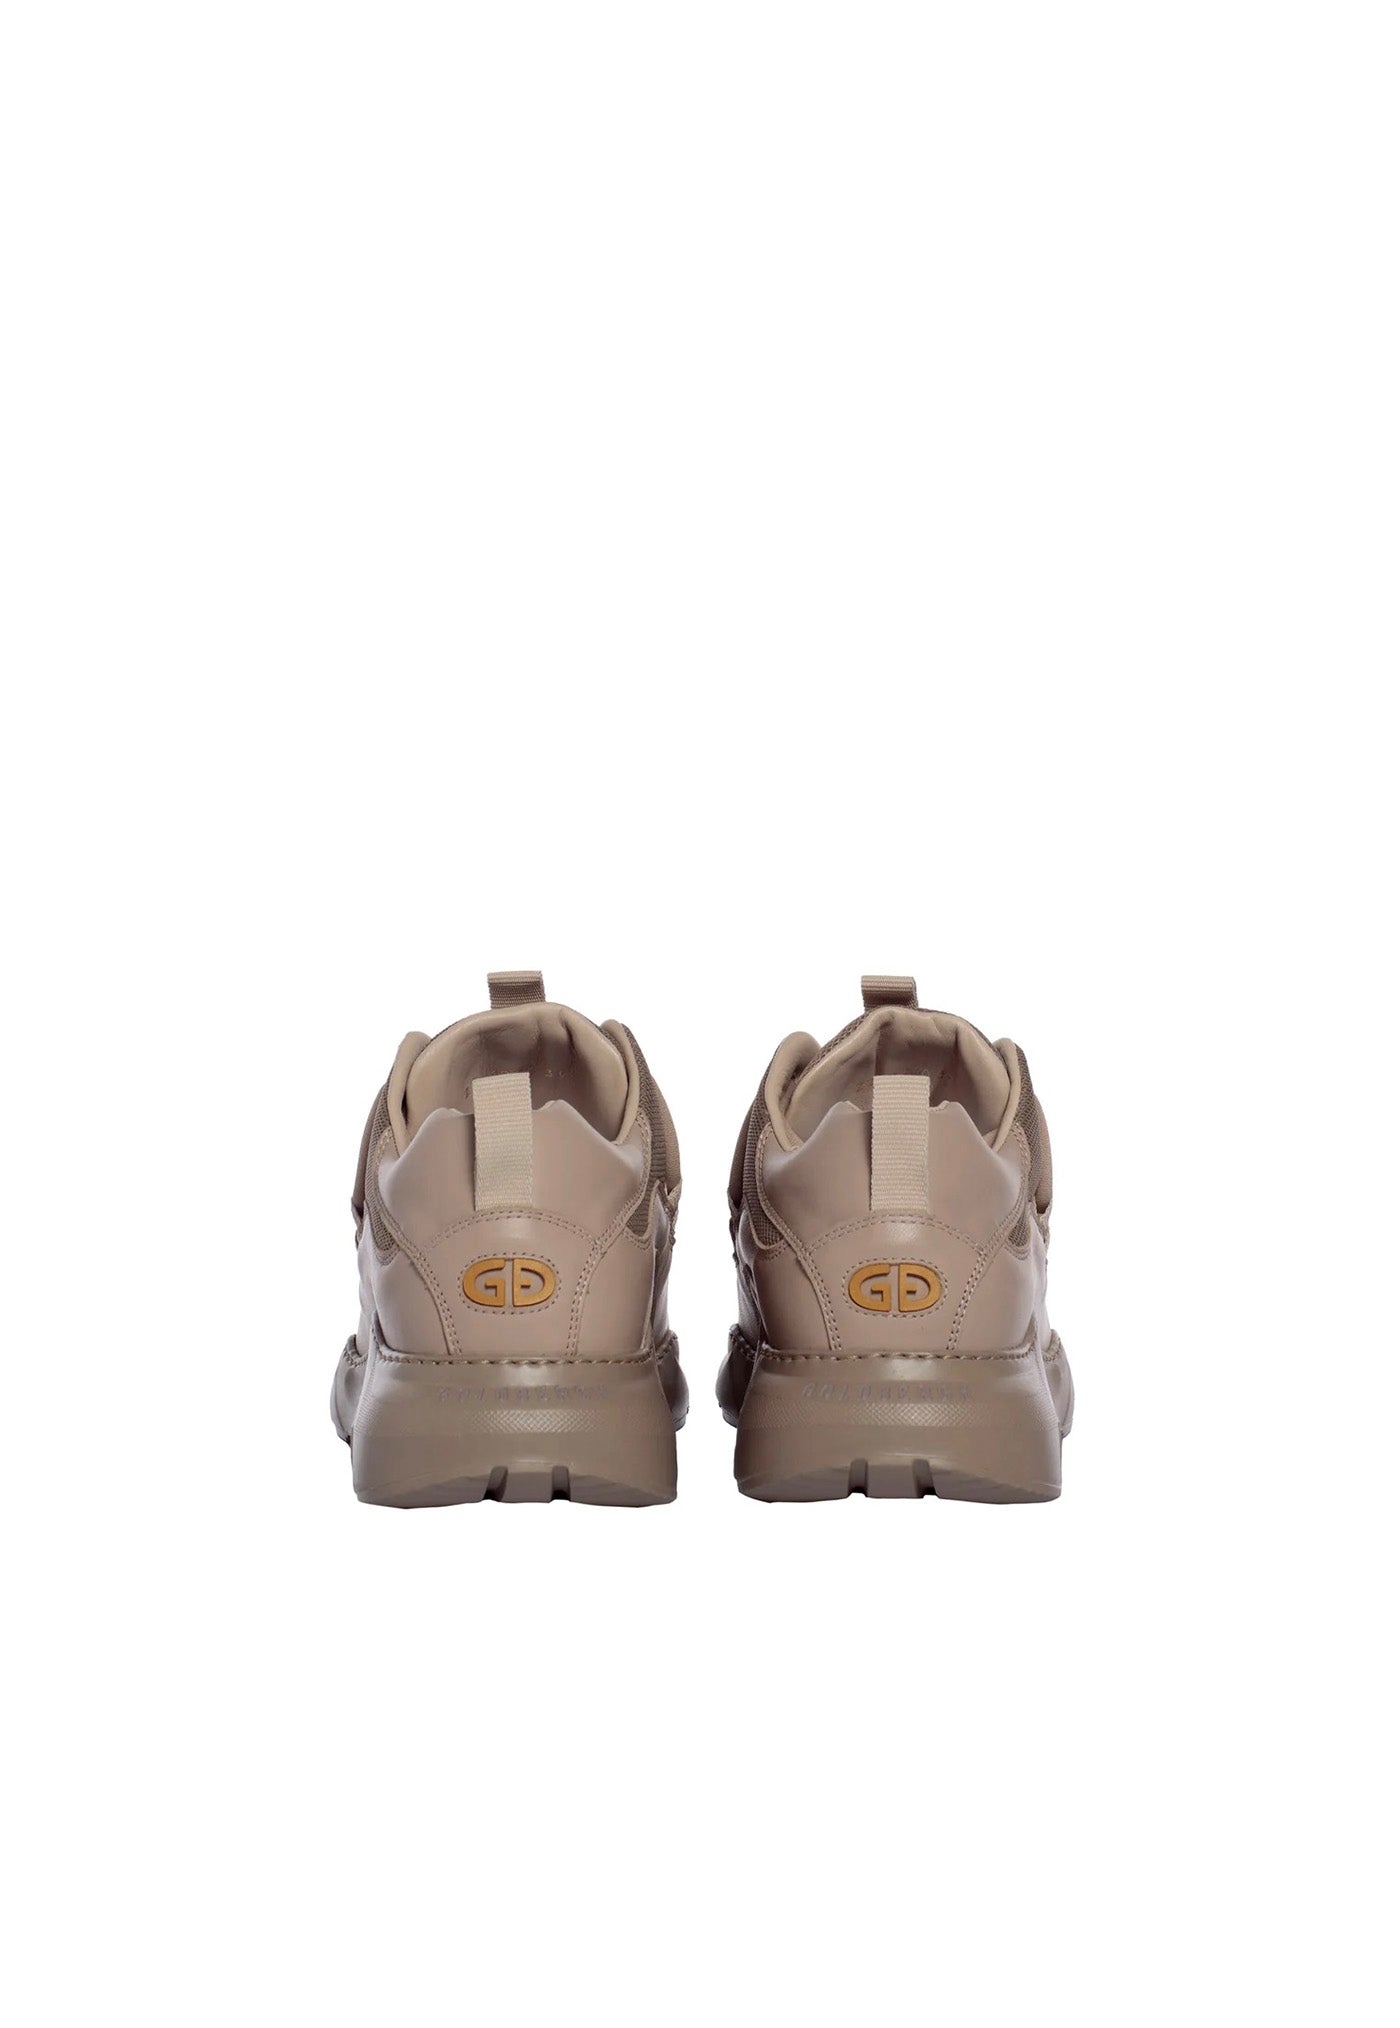 Getty Sneakers - Sandstone sold by Angel Divine